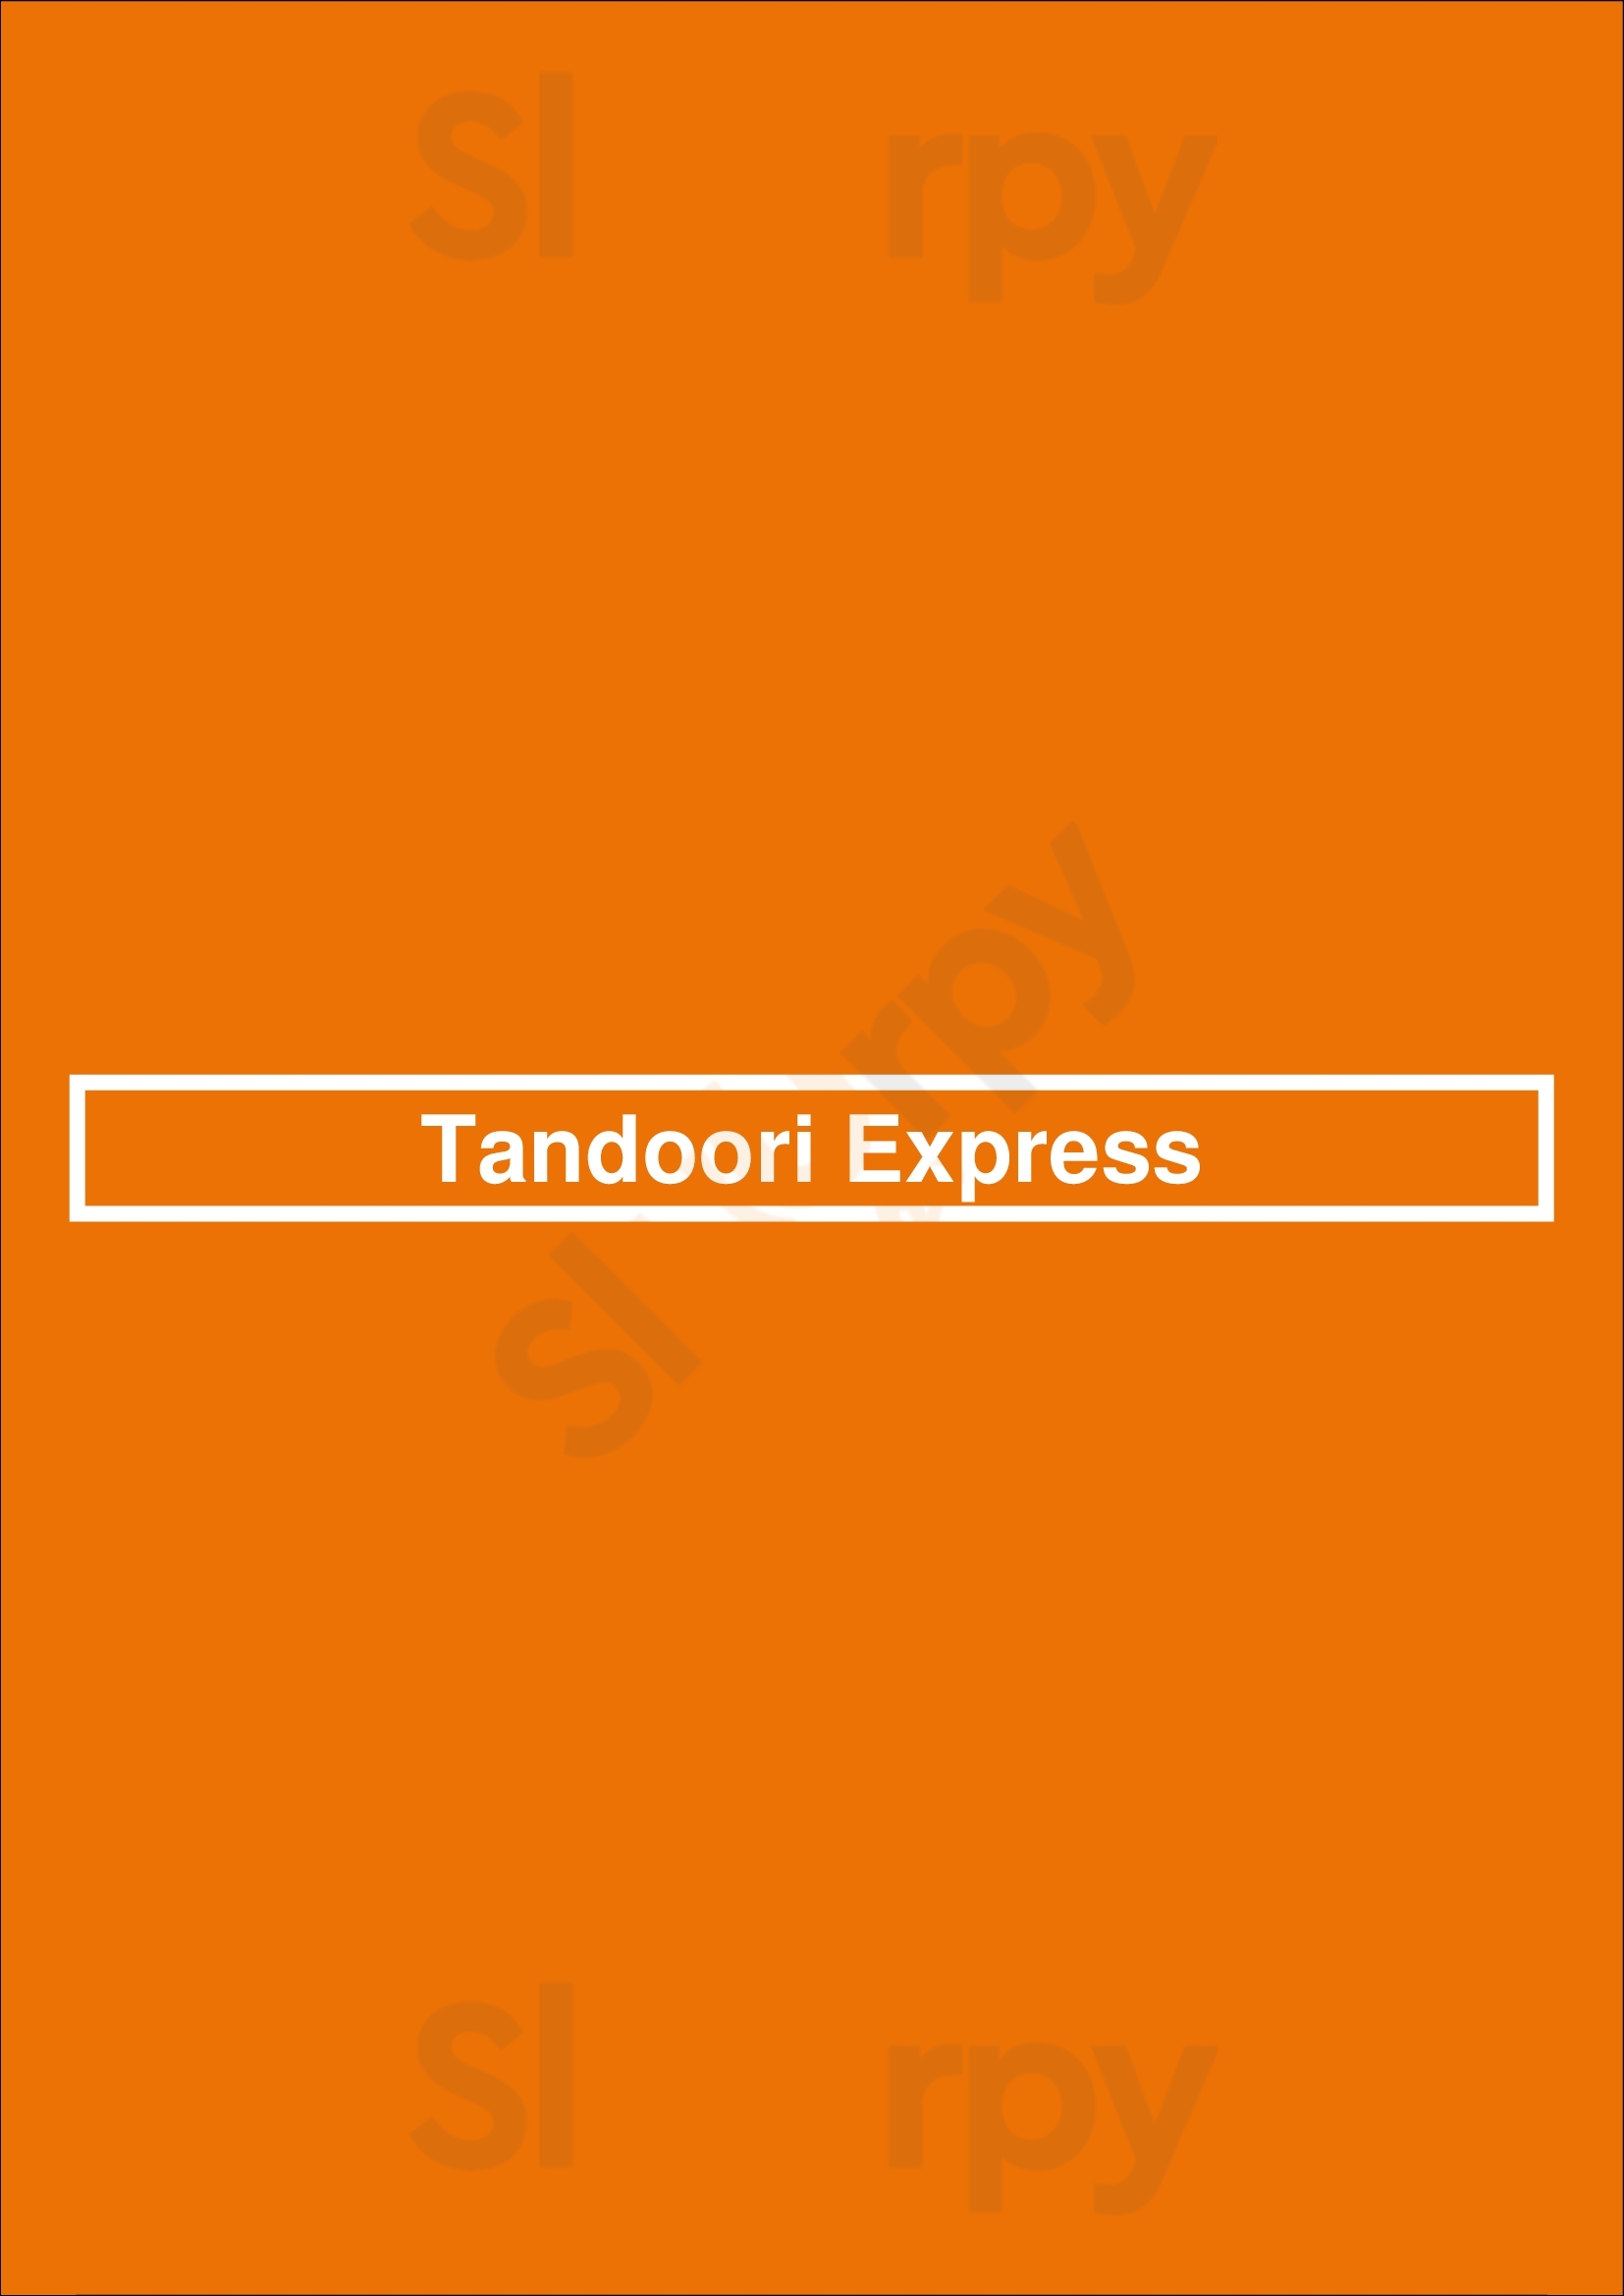 Tandoori Express San Diego Menu - 1